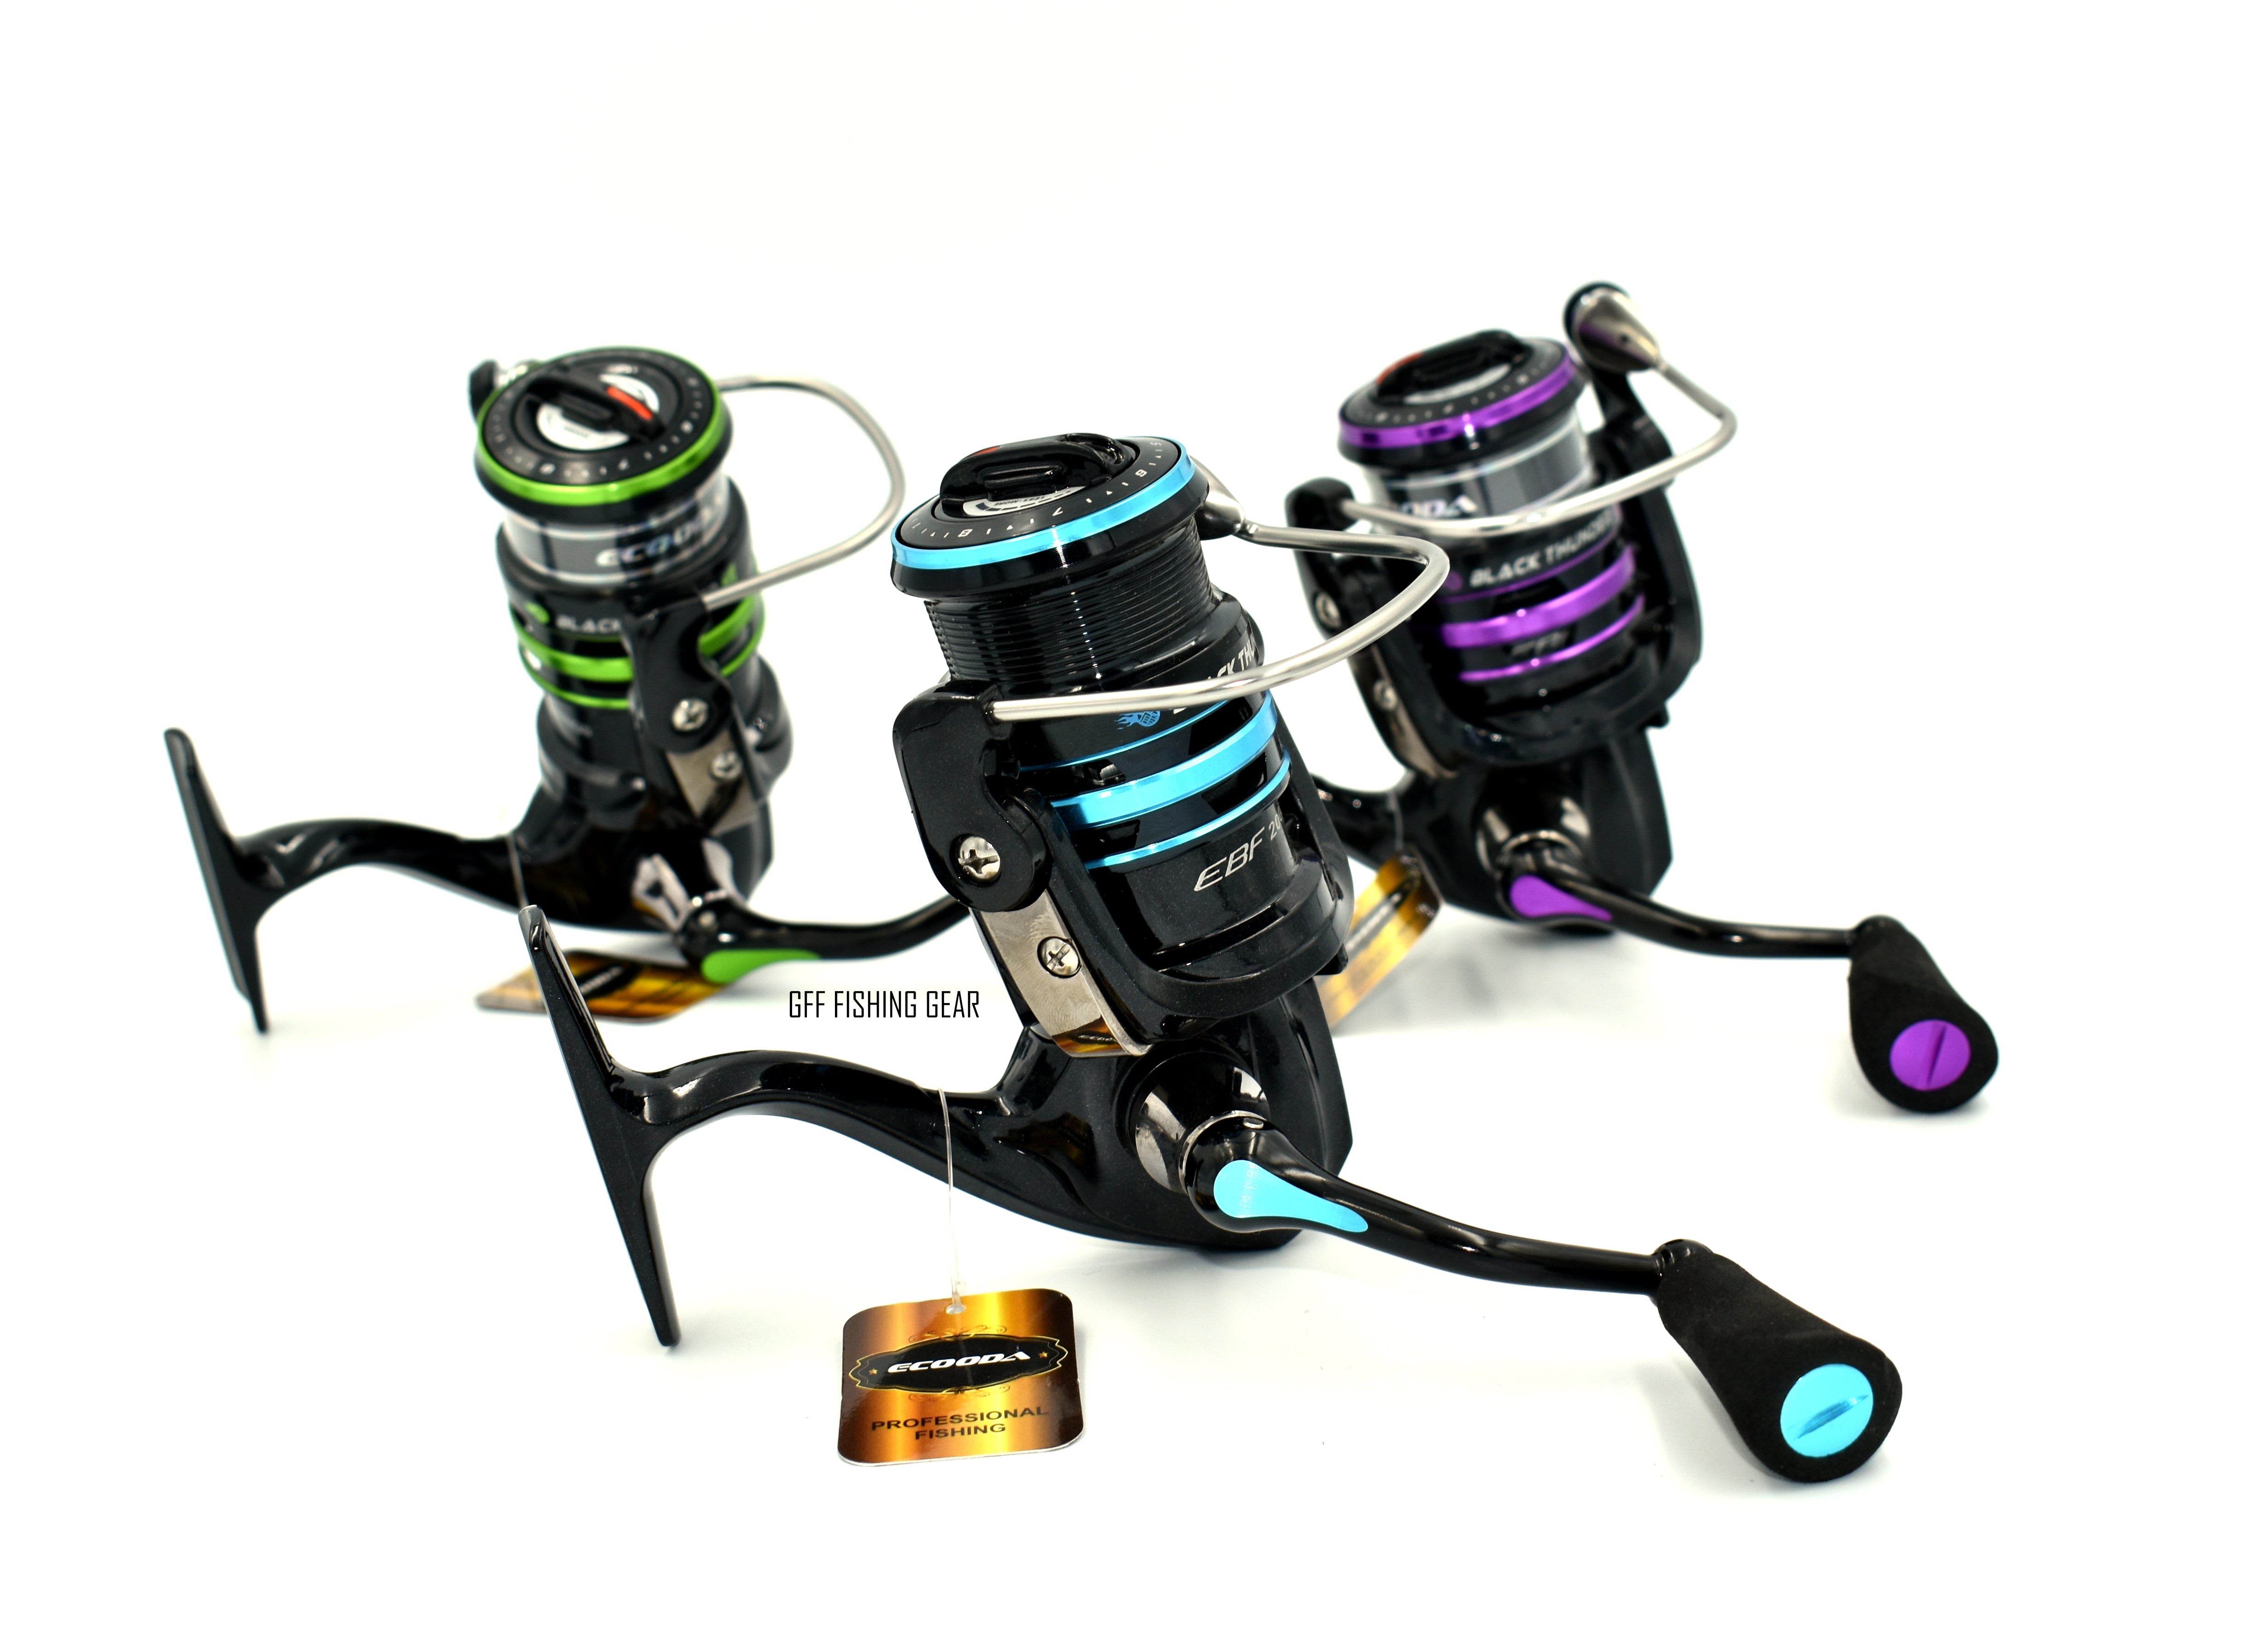 ECOODA Black Thunder Series 2000 Spinning Fishing Reel – GFF FISHING GEAR